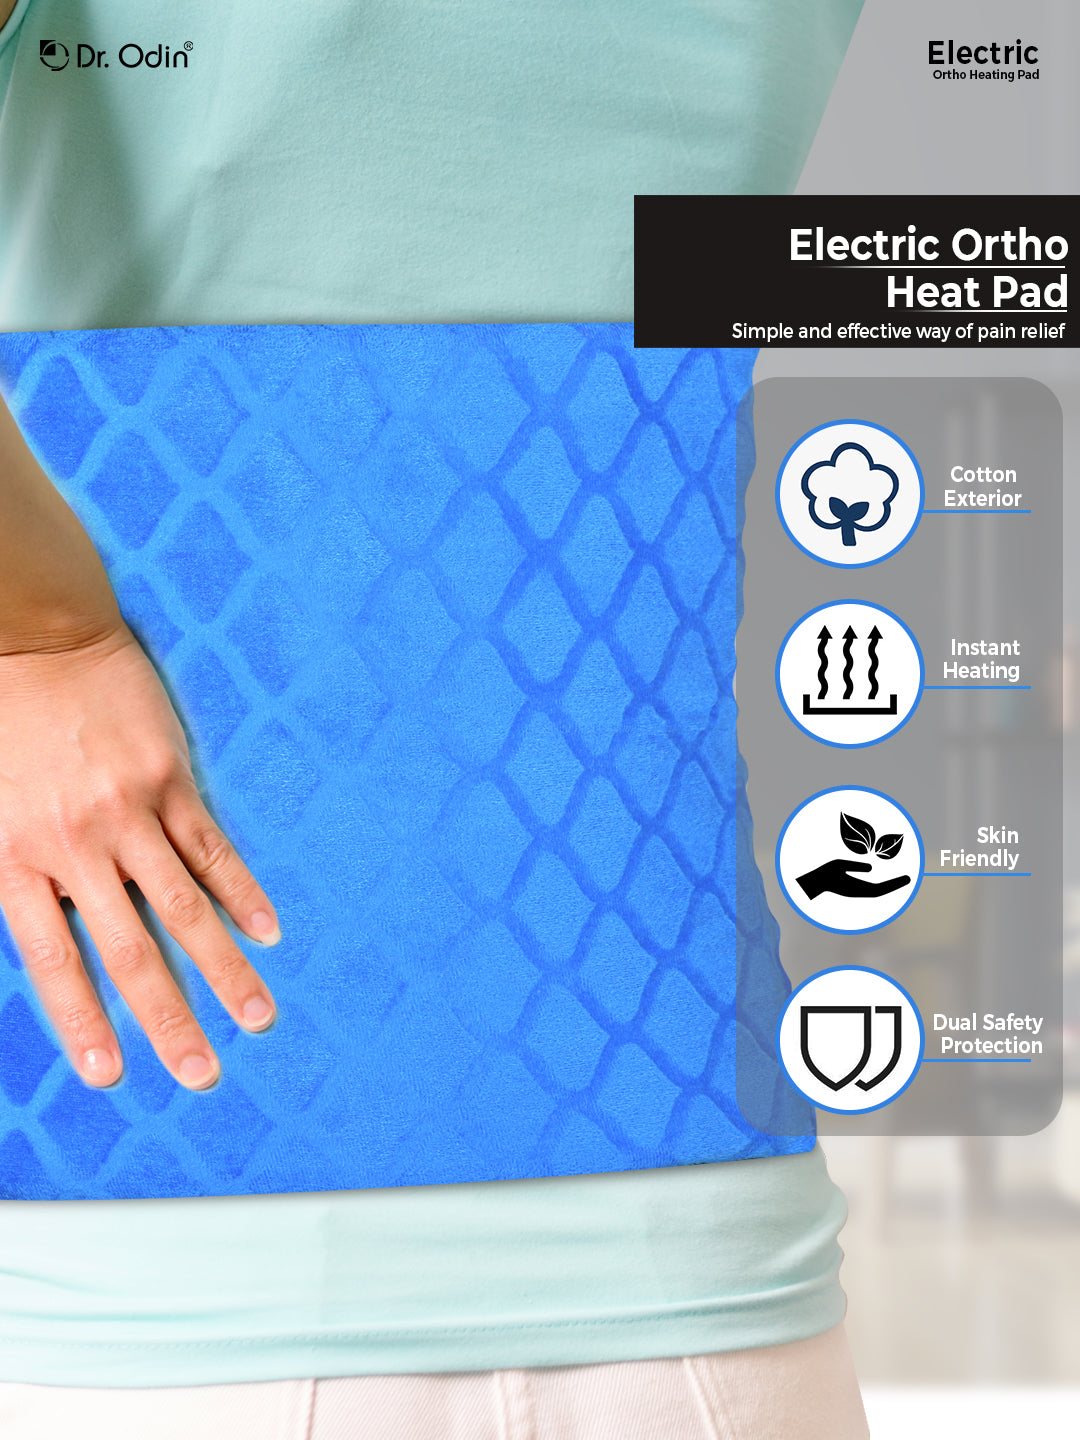 Electric Ortho Heating Pad